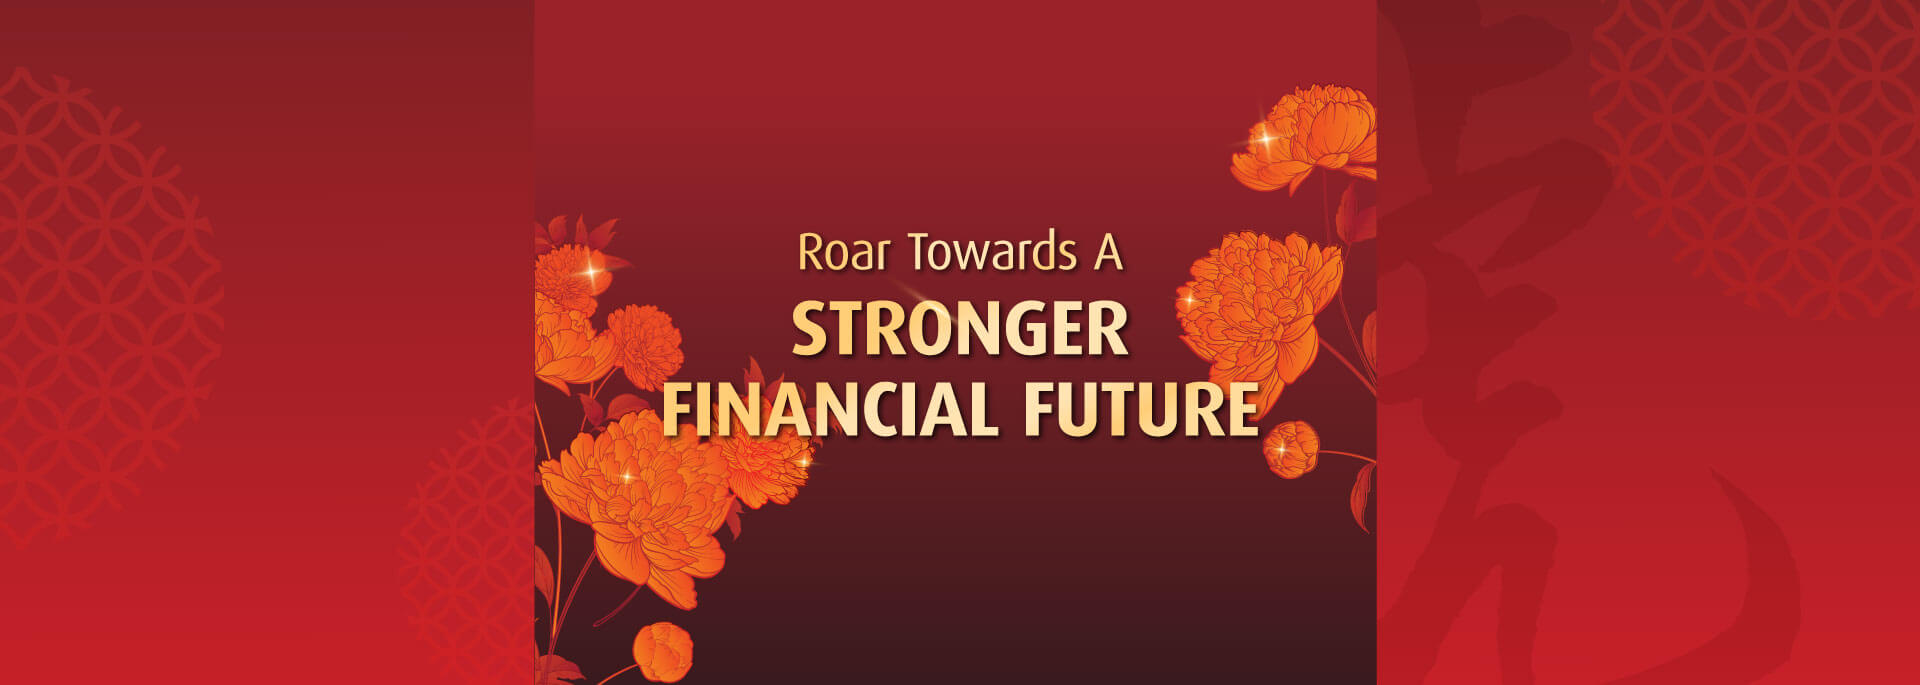 Roar Towards A STRONGER FINANCIAL FUTURE